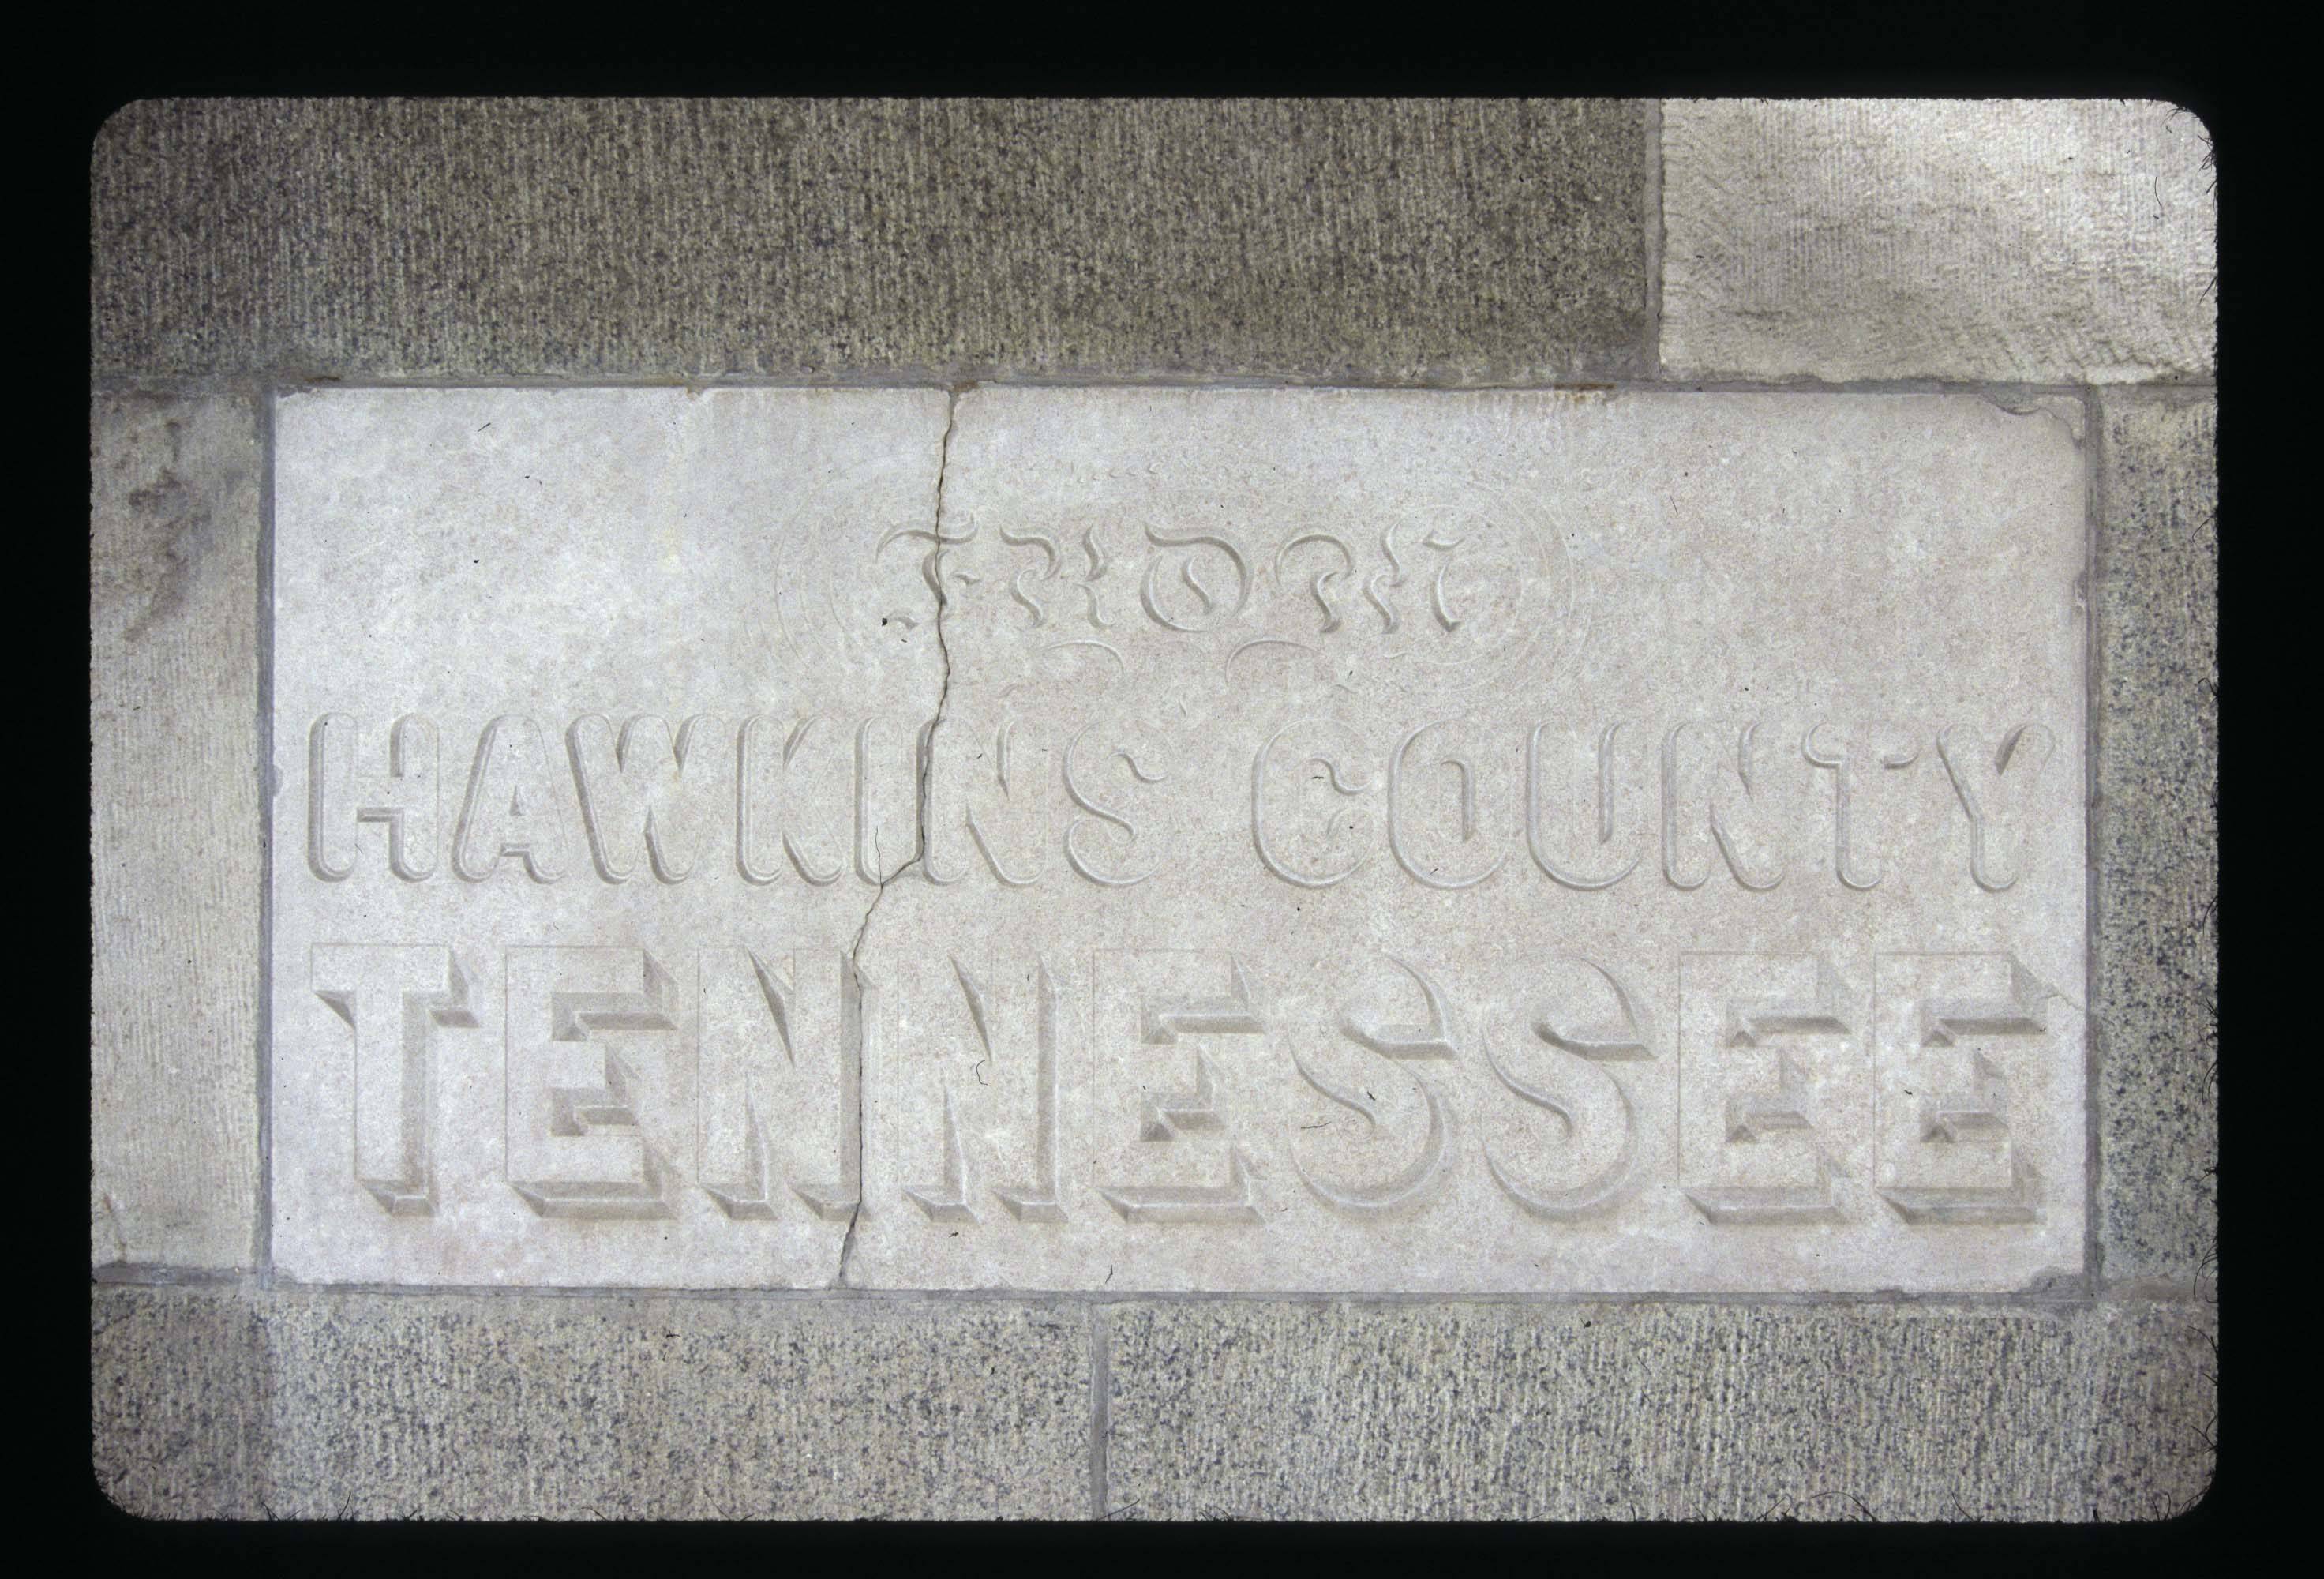 Hawkins County Tennesse